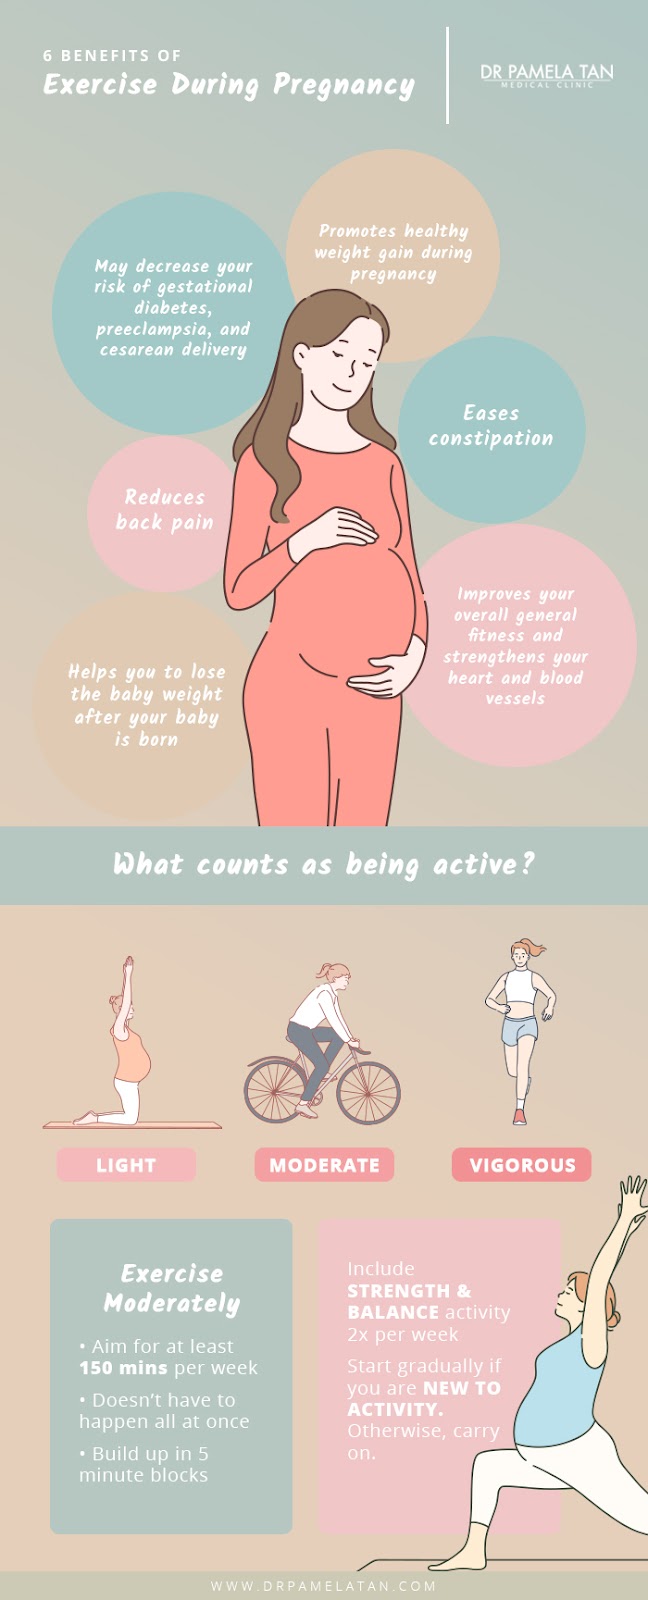 Benefits of Exercise During Pregnancy - Dr Pamela Tan